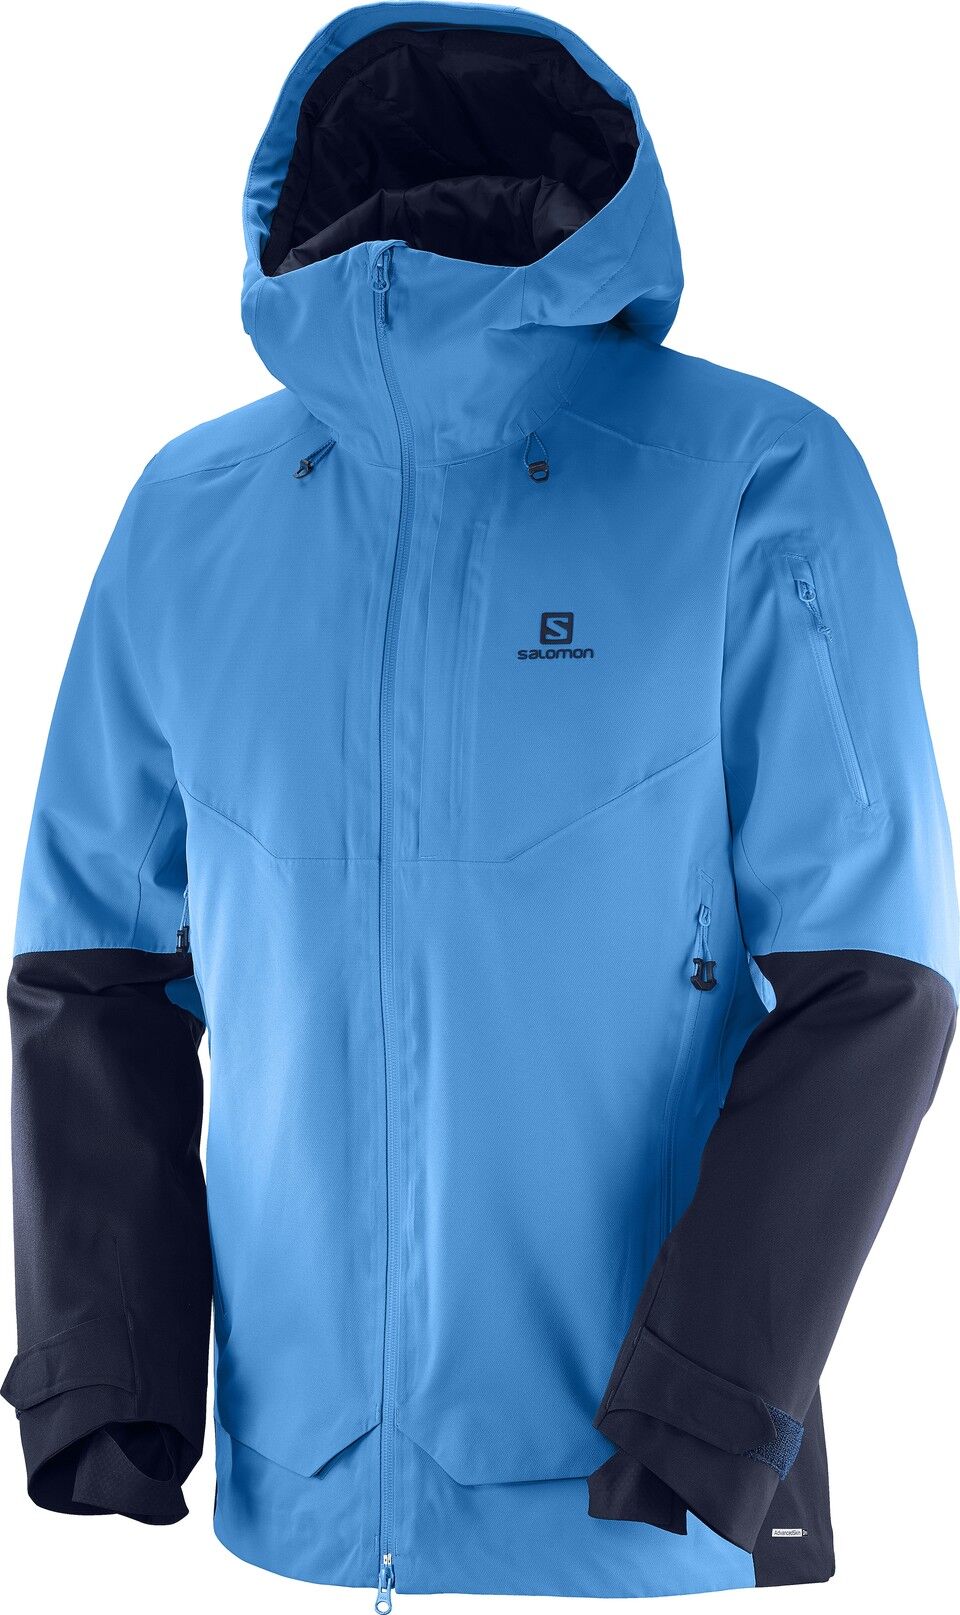 Salomon - Qst Guard Jkt M - Ski jacket - Men's